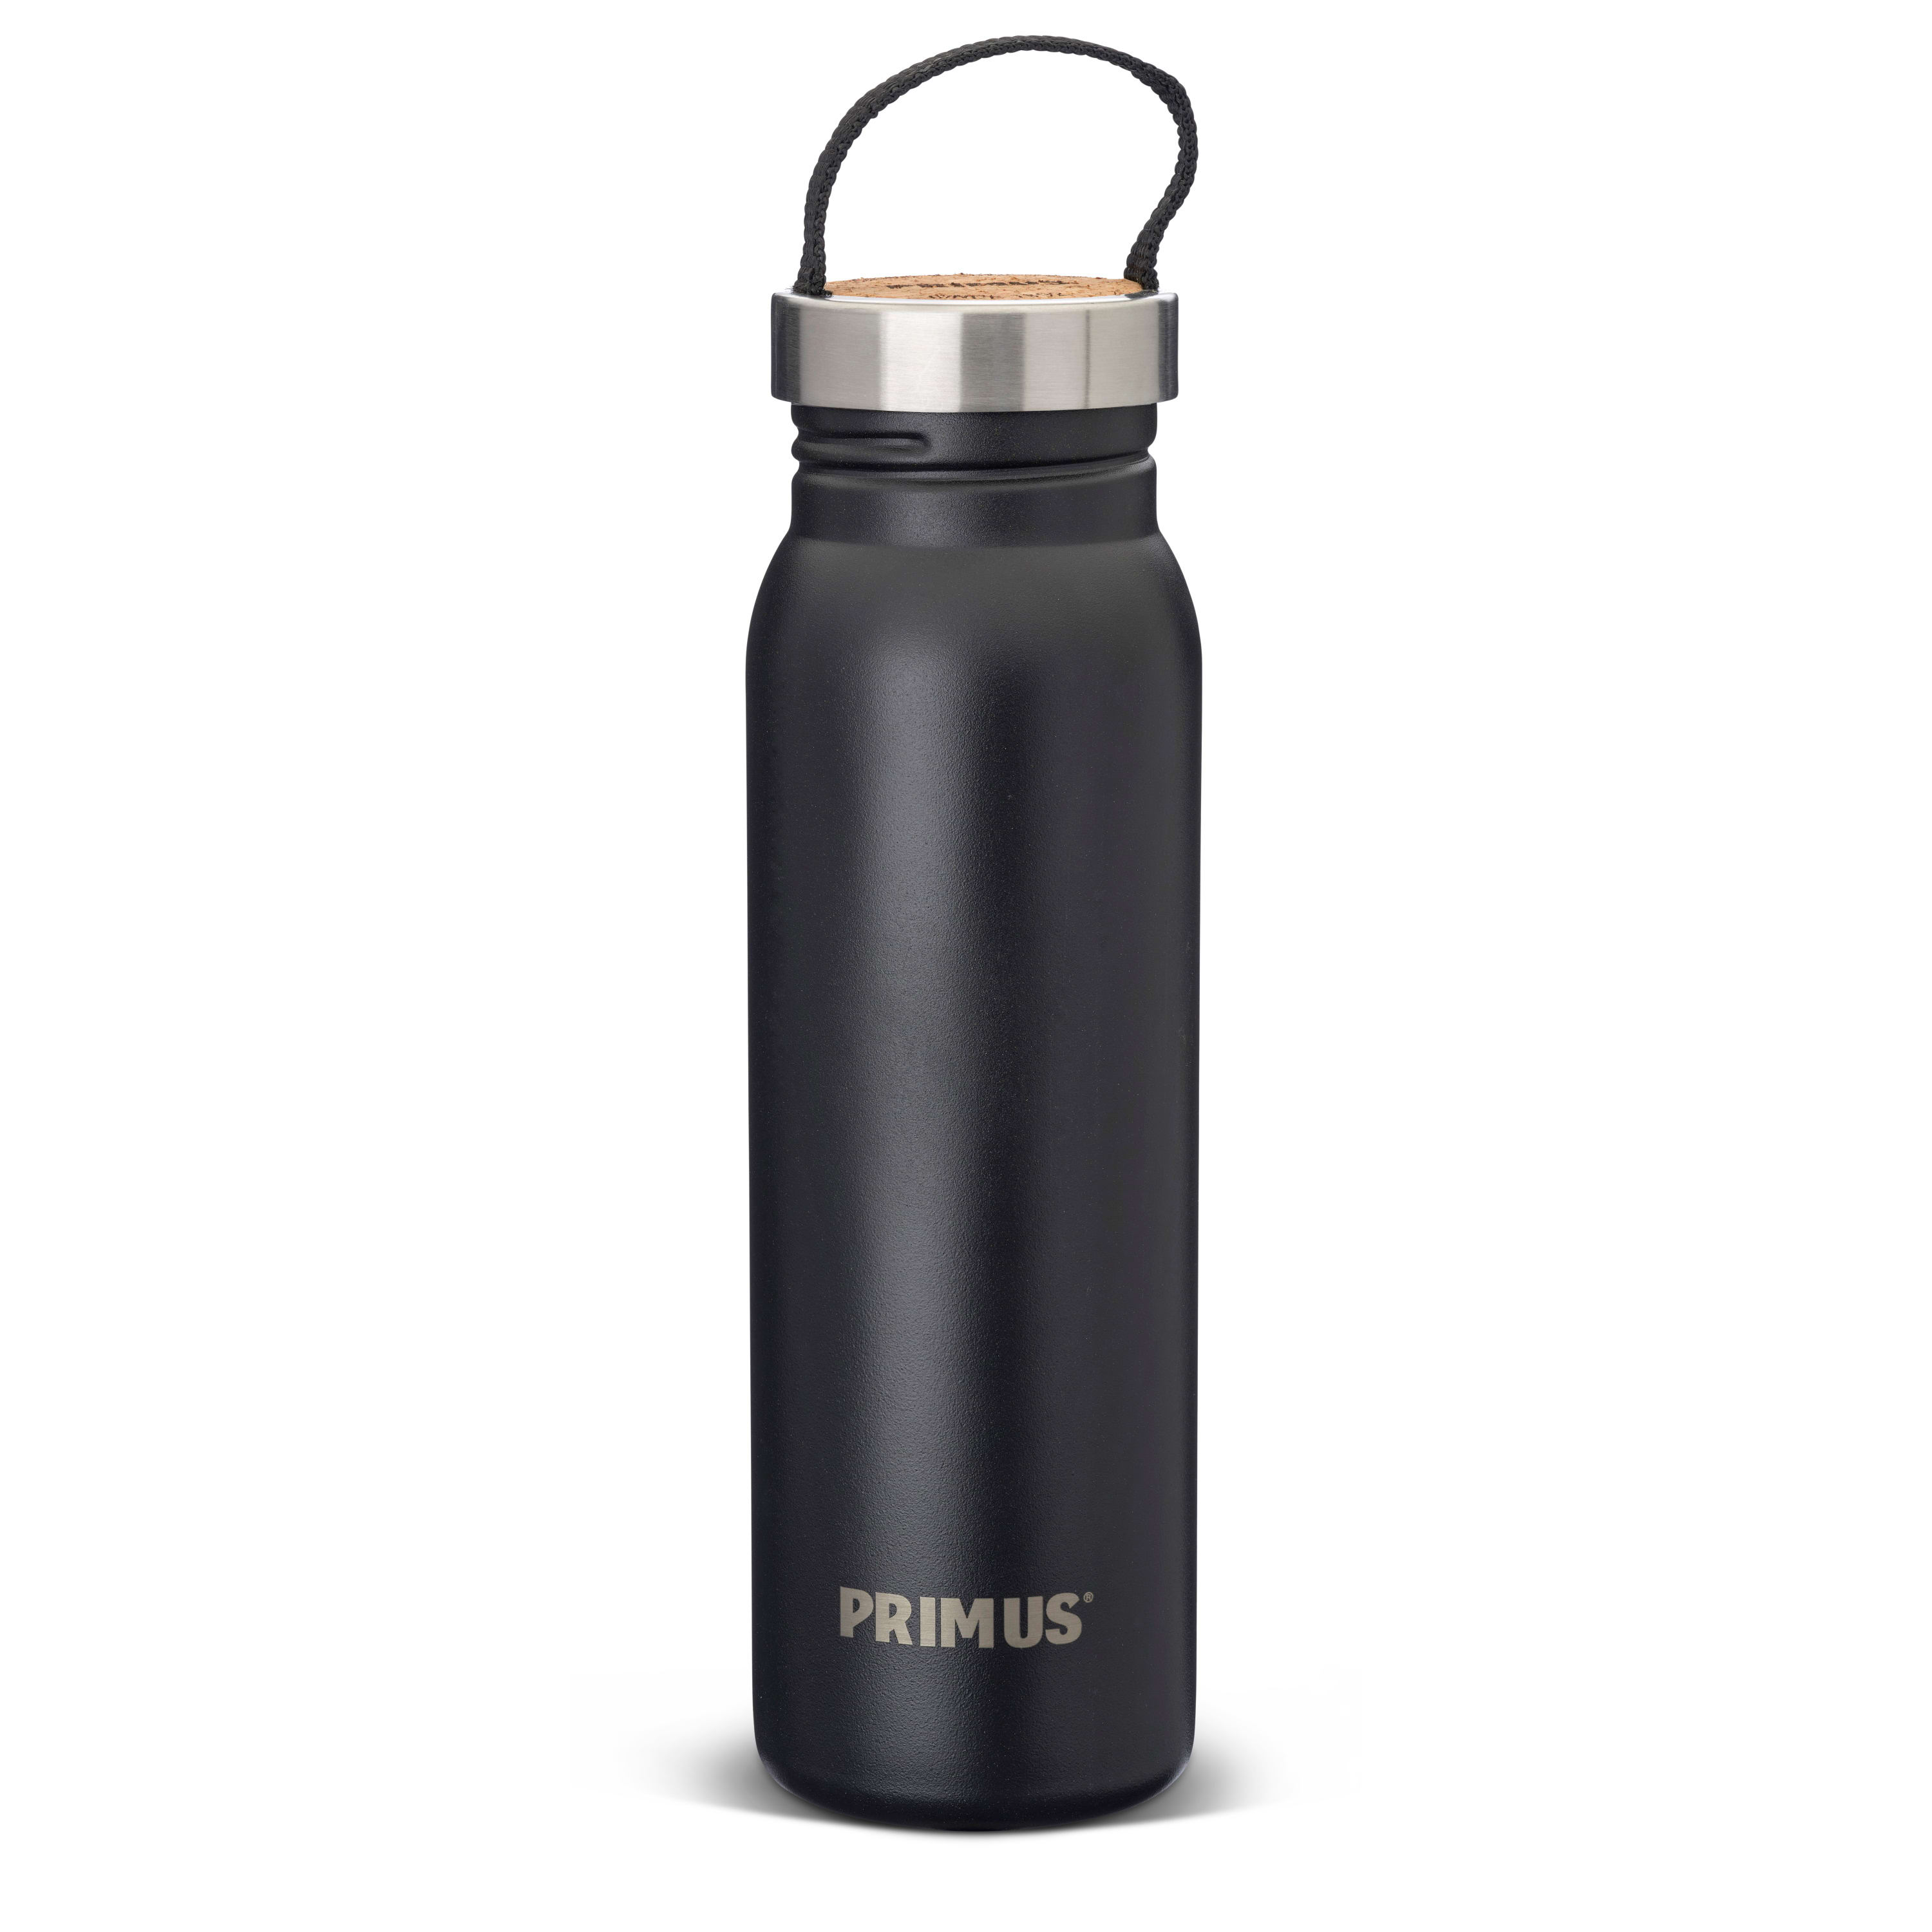 Buy Primus Klunken Bottle 0.7 L from Outnorth